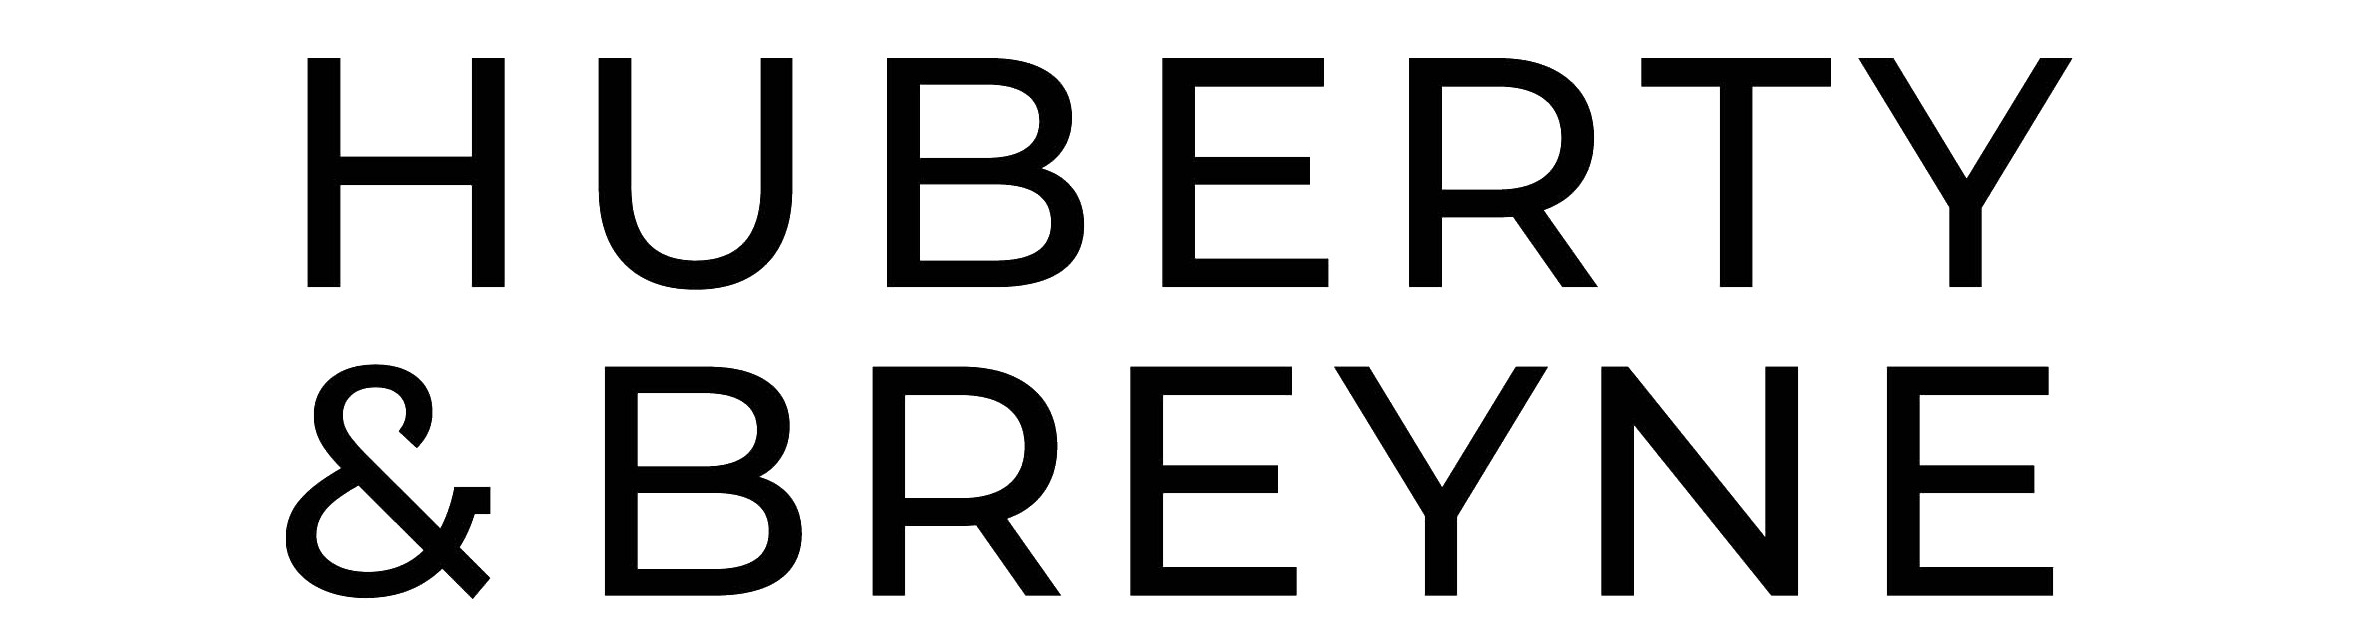 logo galerie huberty & breyne